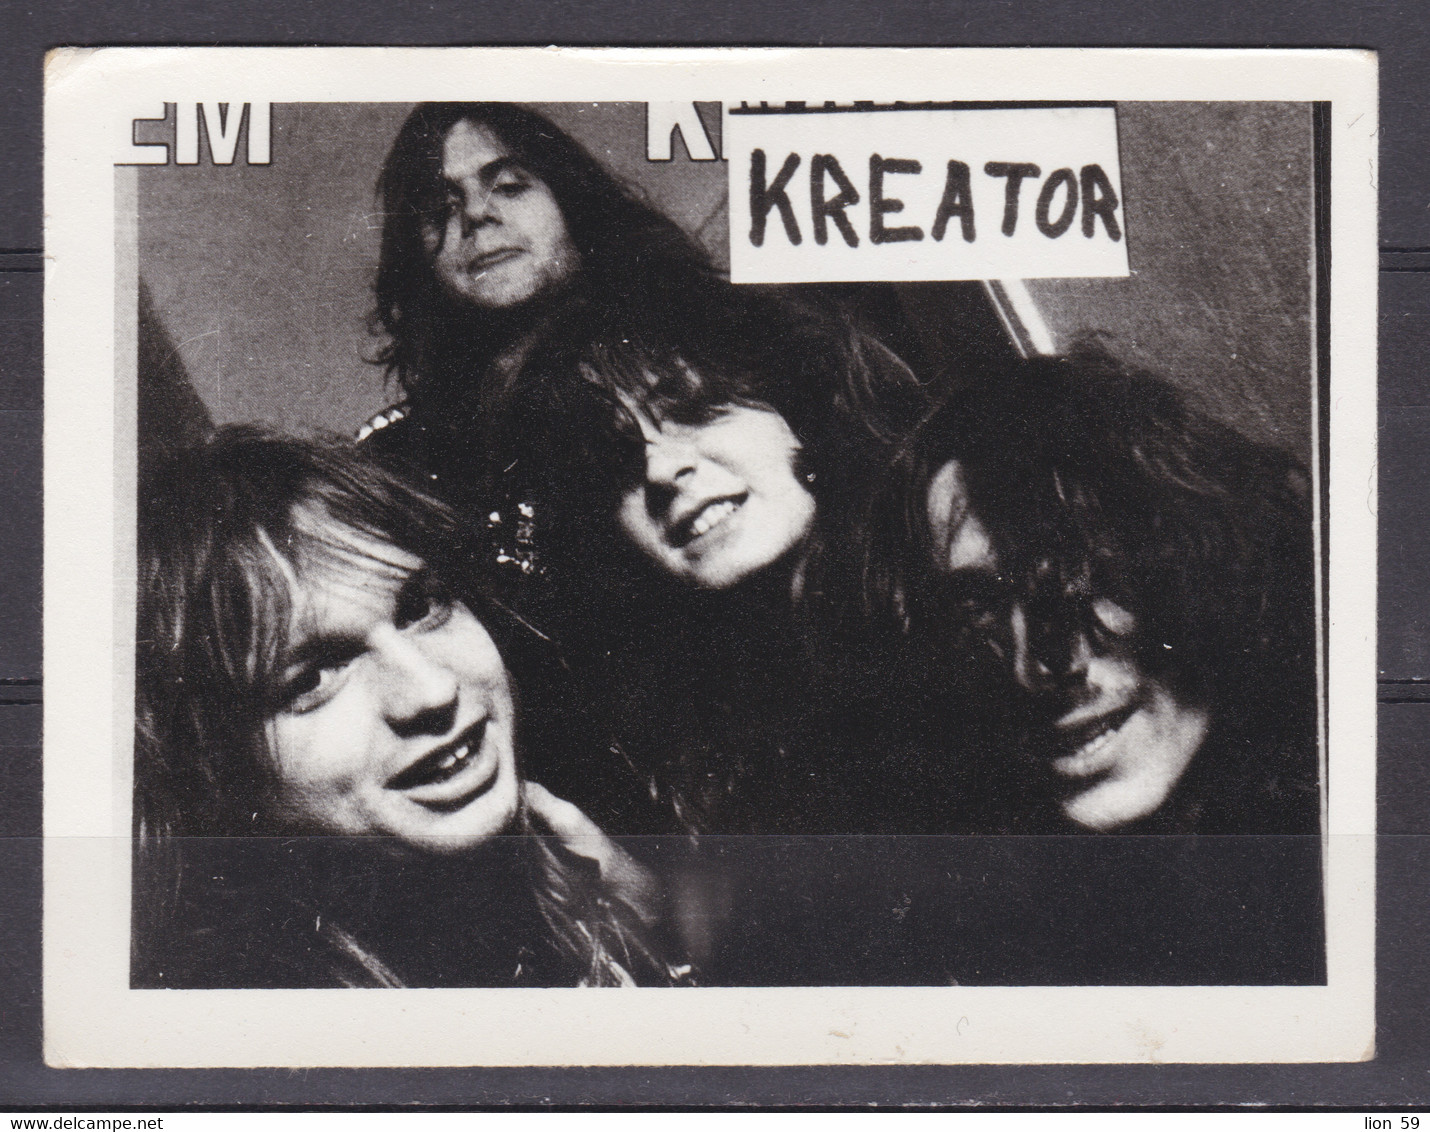 272873 / Kreator -  German Thrash Metal Band From Essen, Formed In 1982 Vocalist  Rhythm Guitarist Miland "Mille" Photo - Fotos